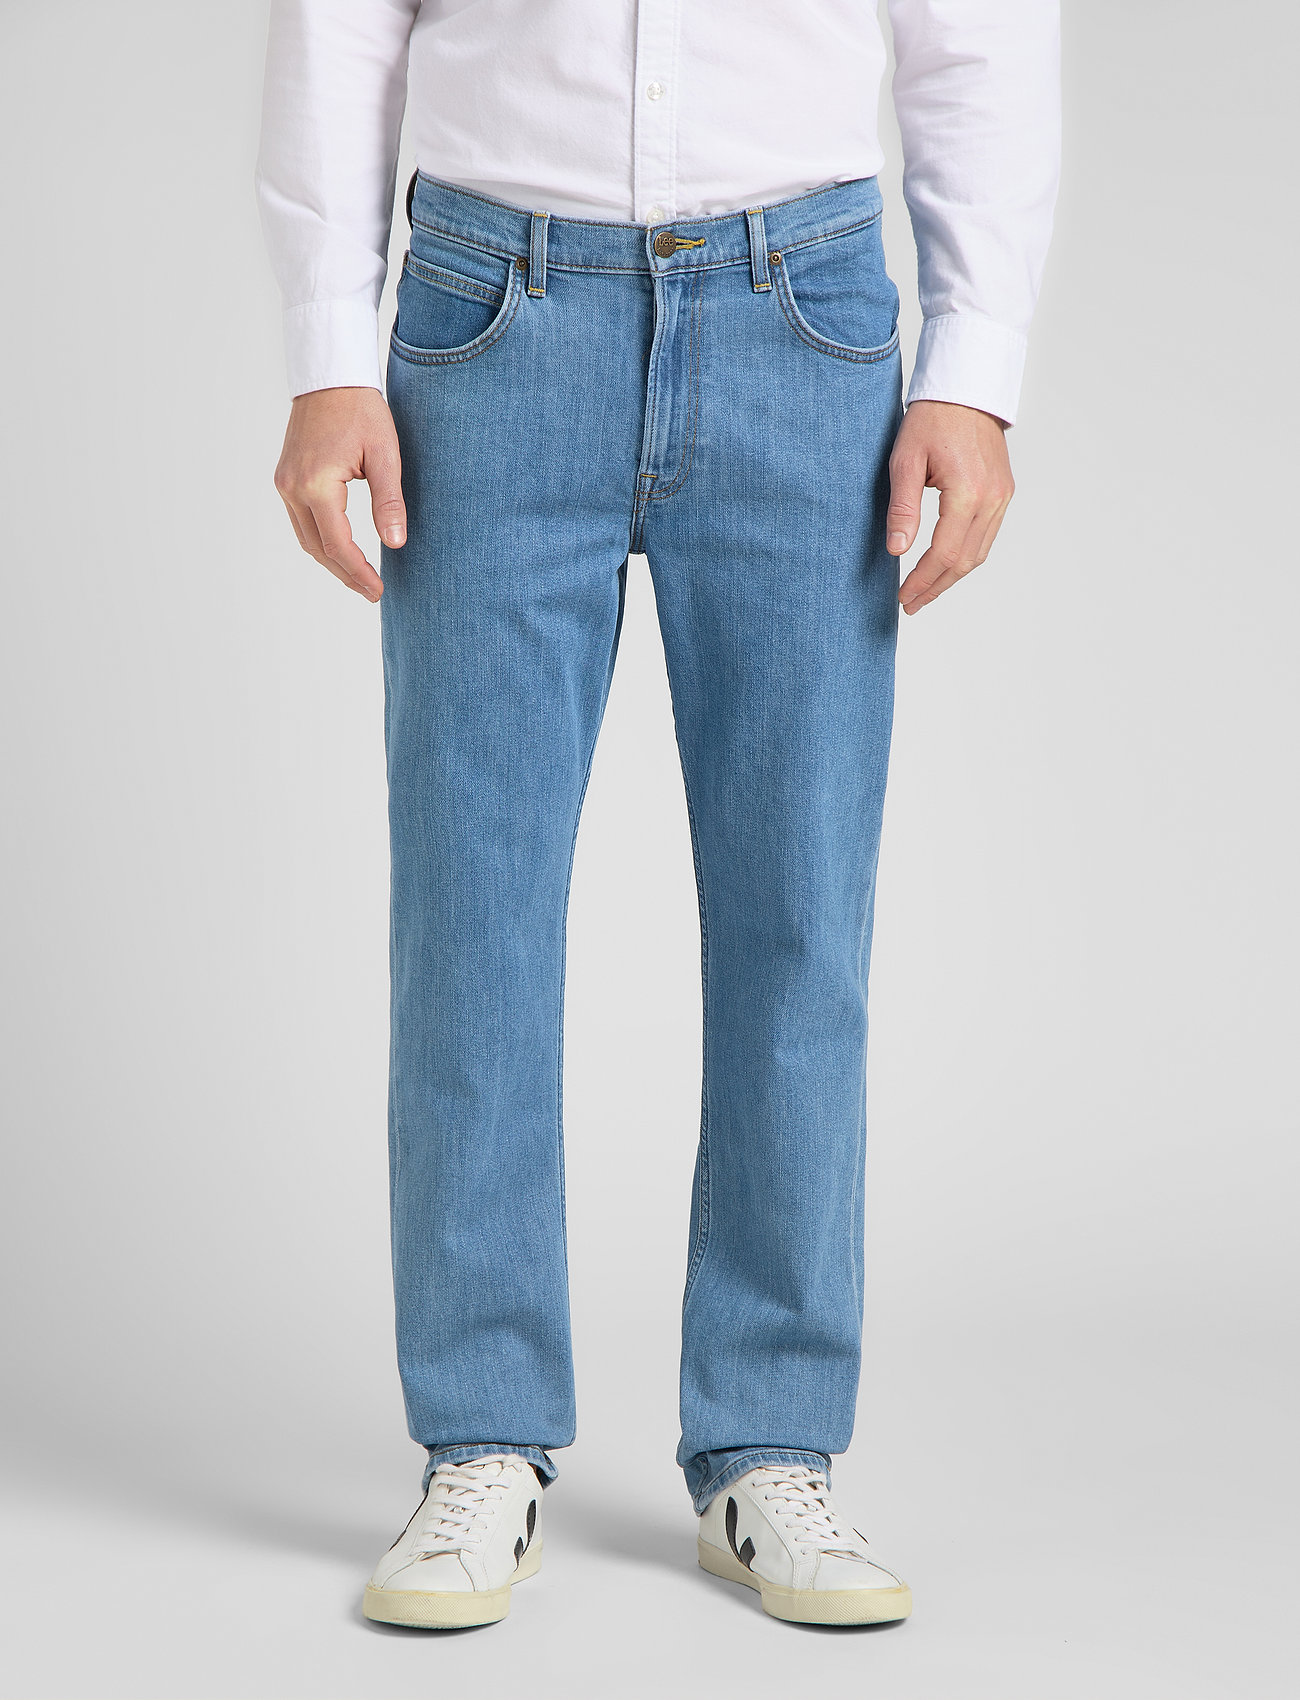 Lee Jeans - BROOKLYN STRAIGHT - regular jeans - light stone - 0